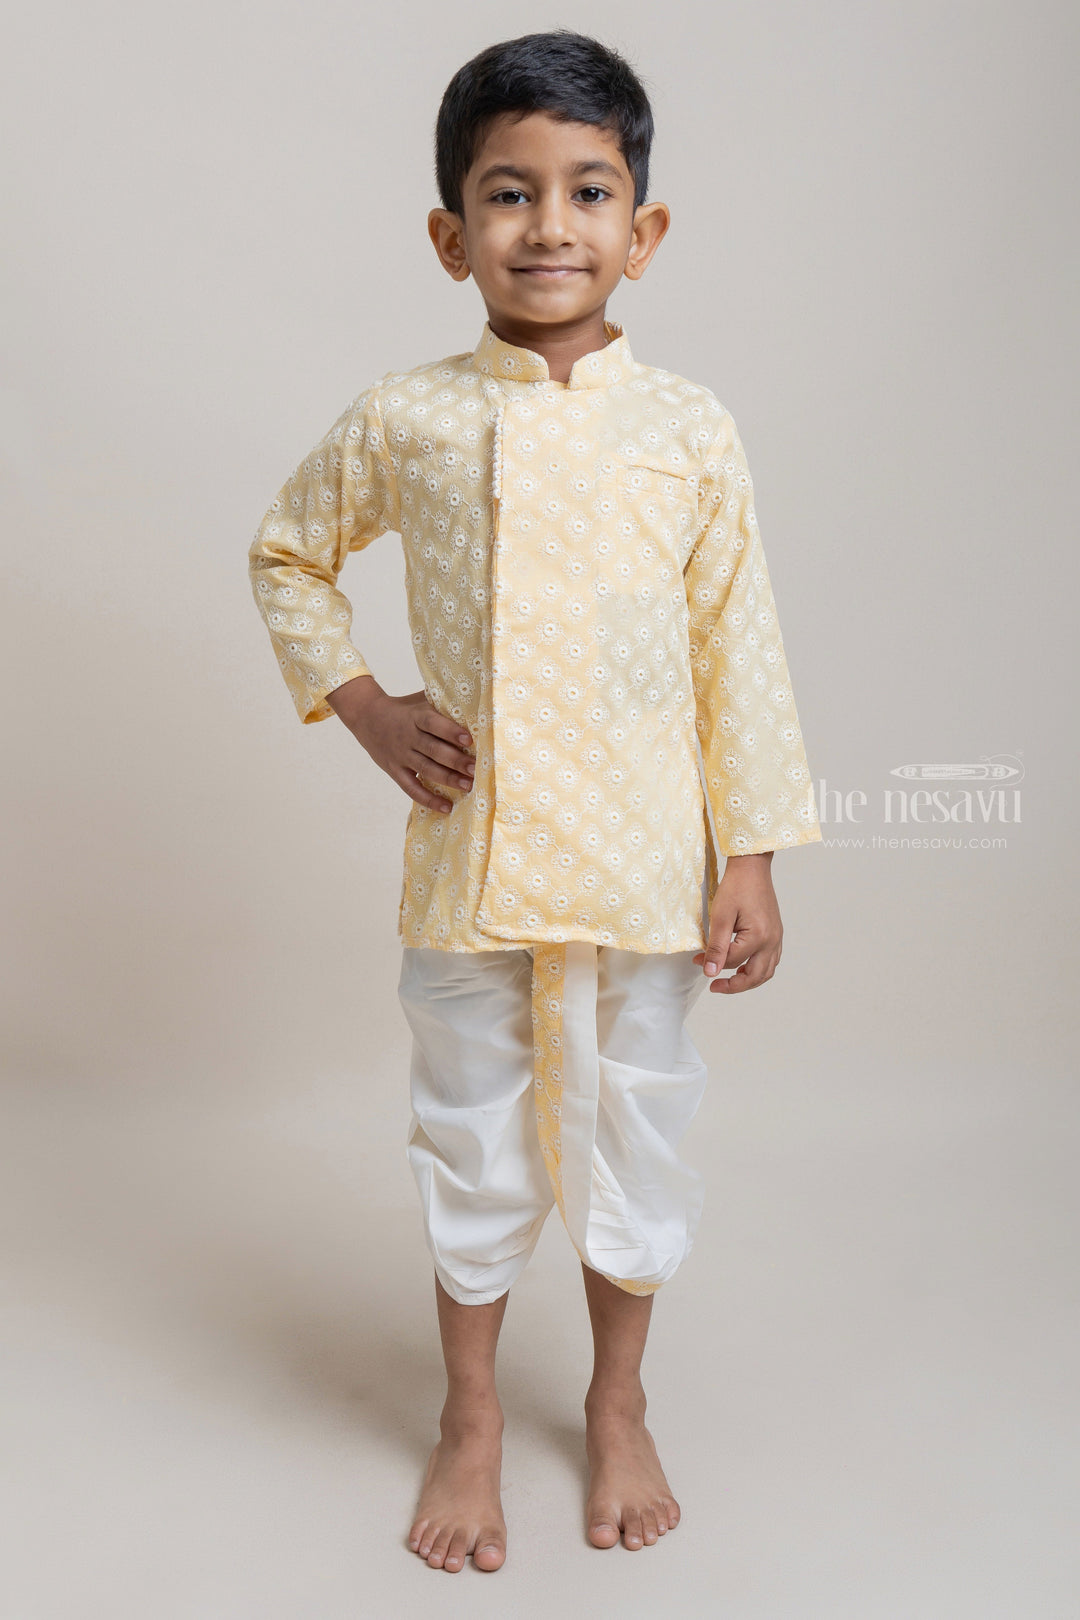 The Nesavu Boys Dothi Set Embroidery Yellow Ethnic Kurta With White Dhoti For Boys Nesavu 10 (NB) / Yellow / Cotton BES288B-10 Premium Yellow Kurta For Boys | Ethnic Wear Collection | The Nesavu